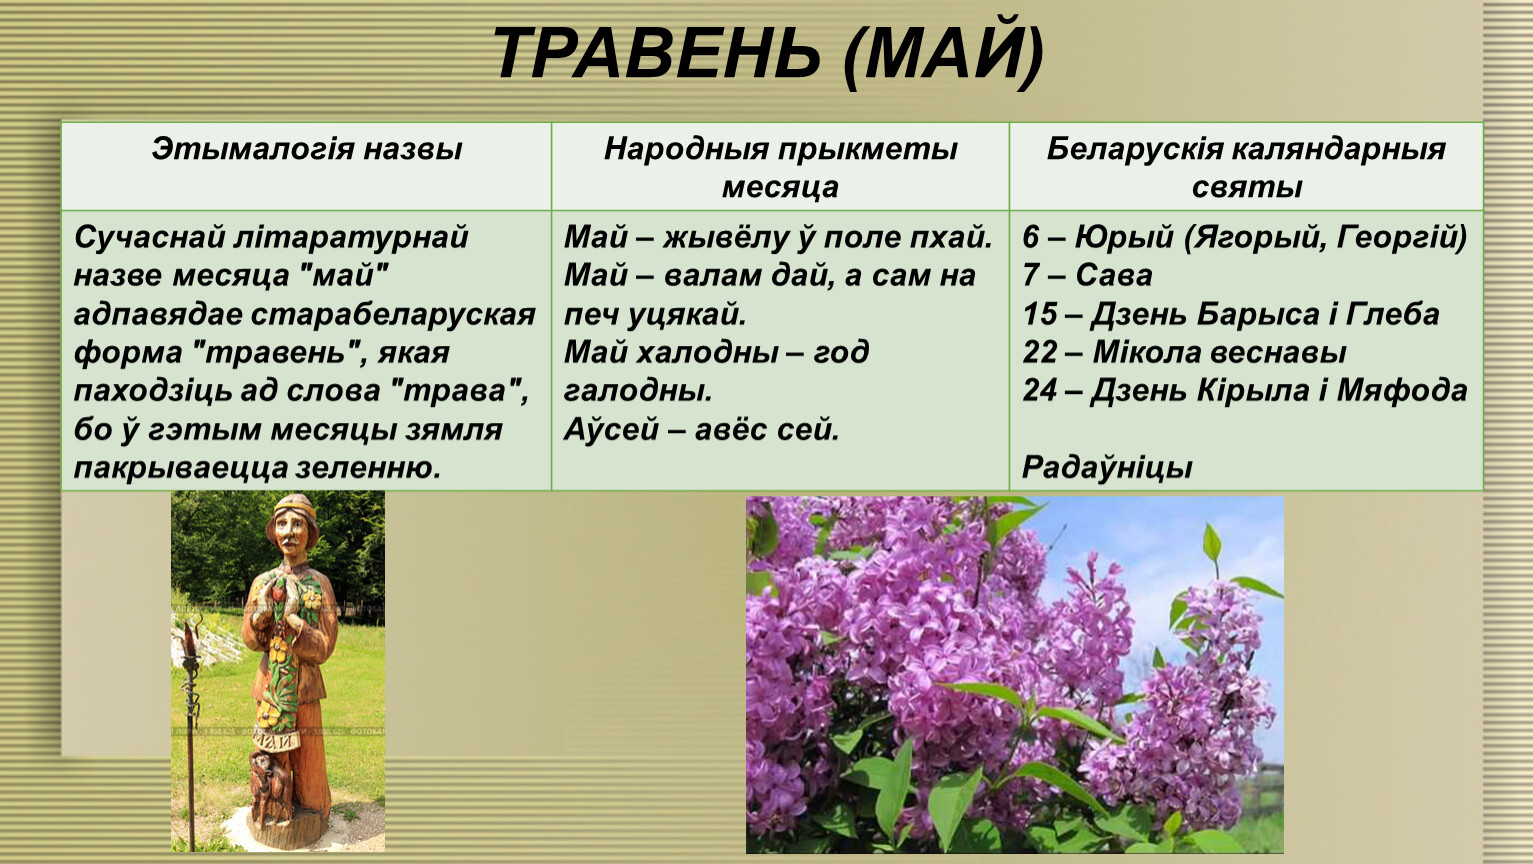 Как будет март по белорусски. Май травень. Май название месяца. Травень месяц май. Май характеристика месяца.